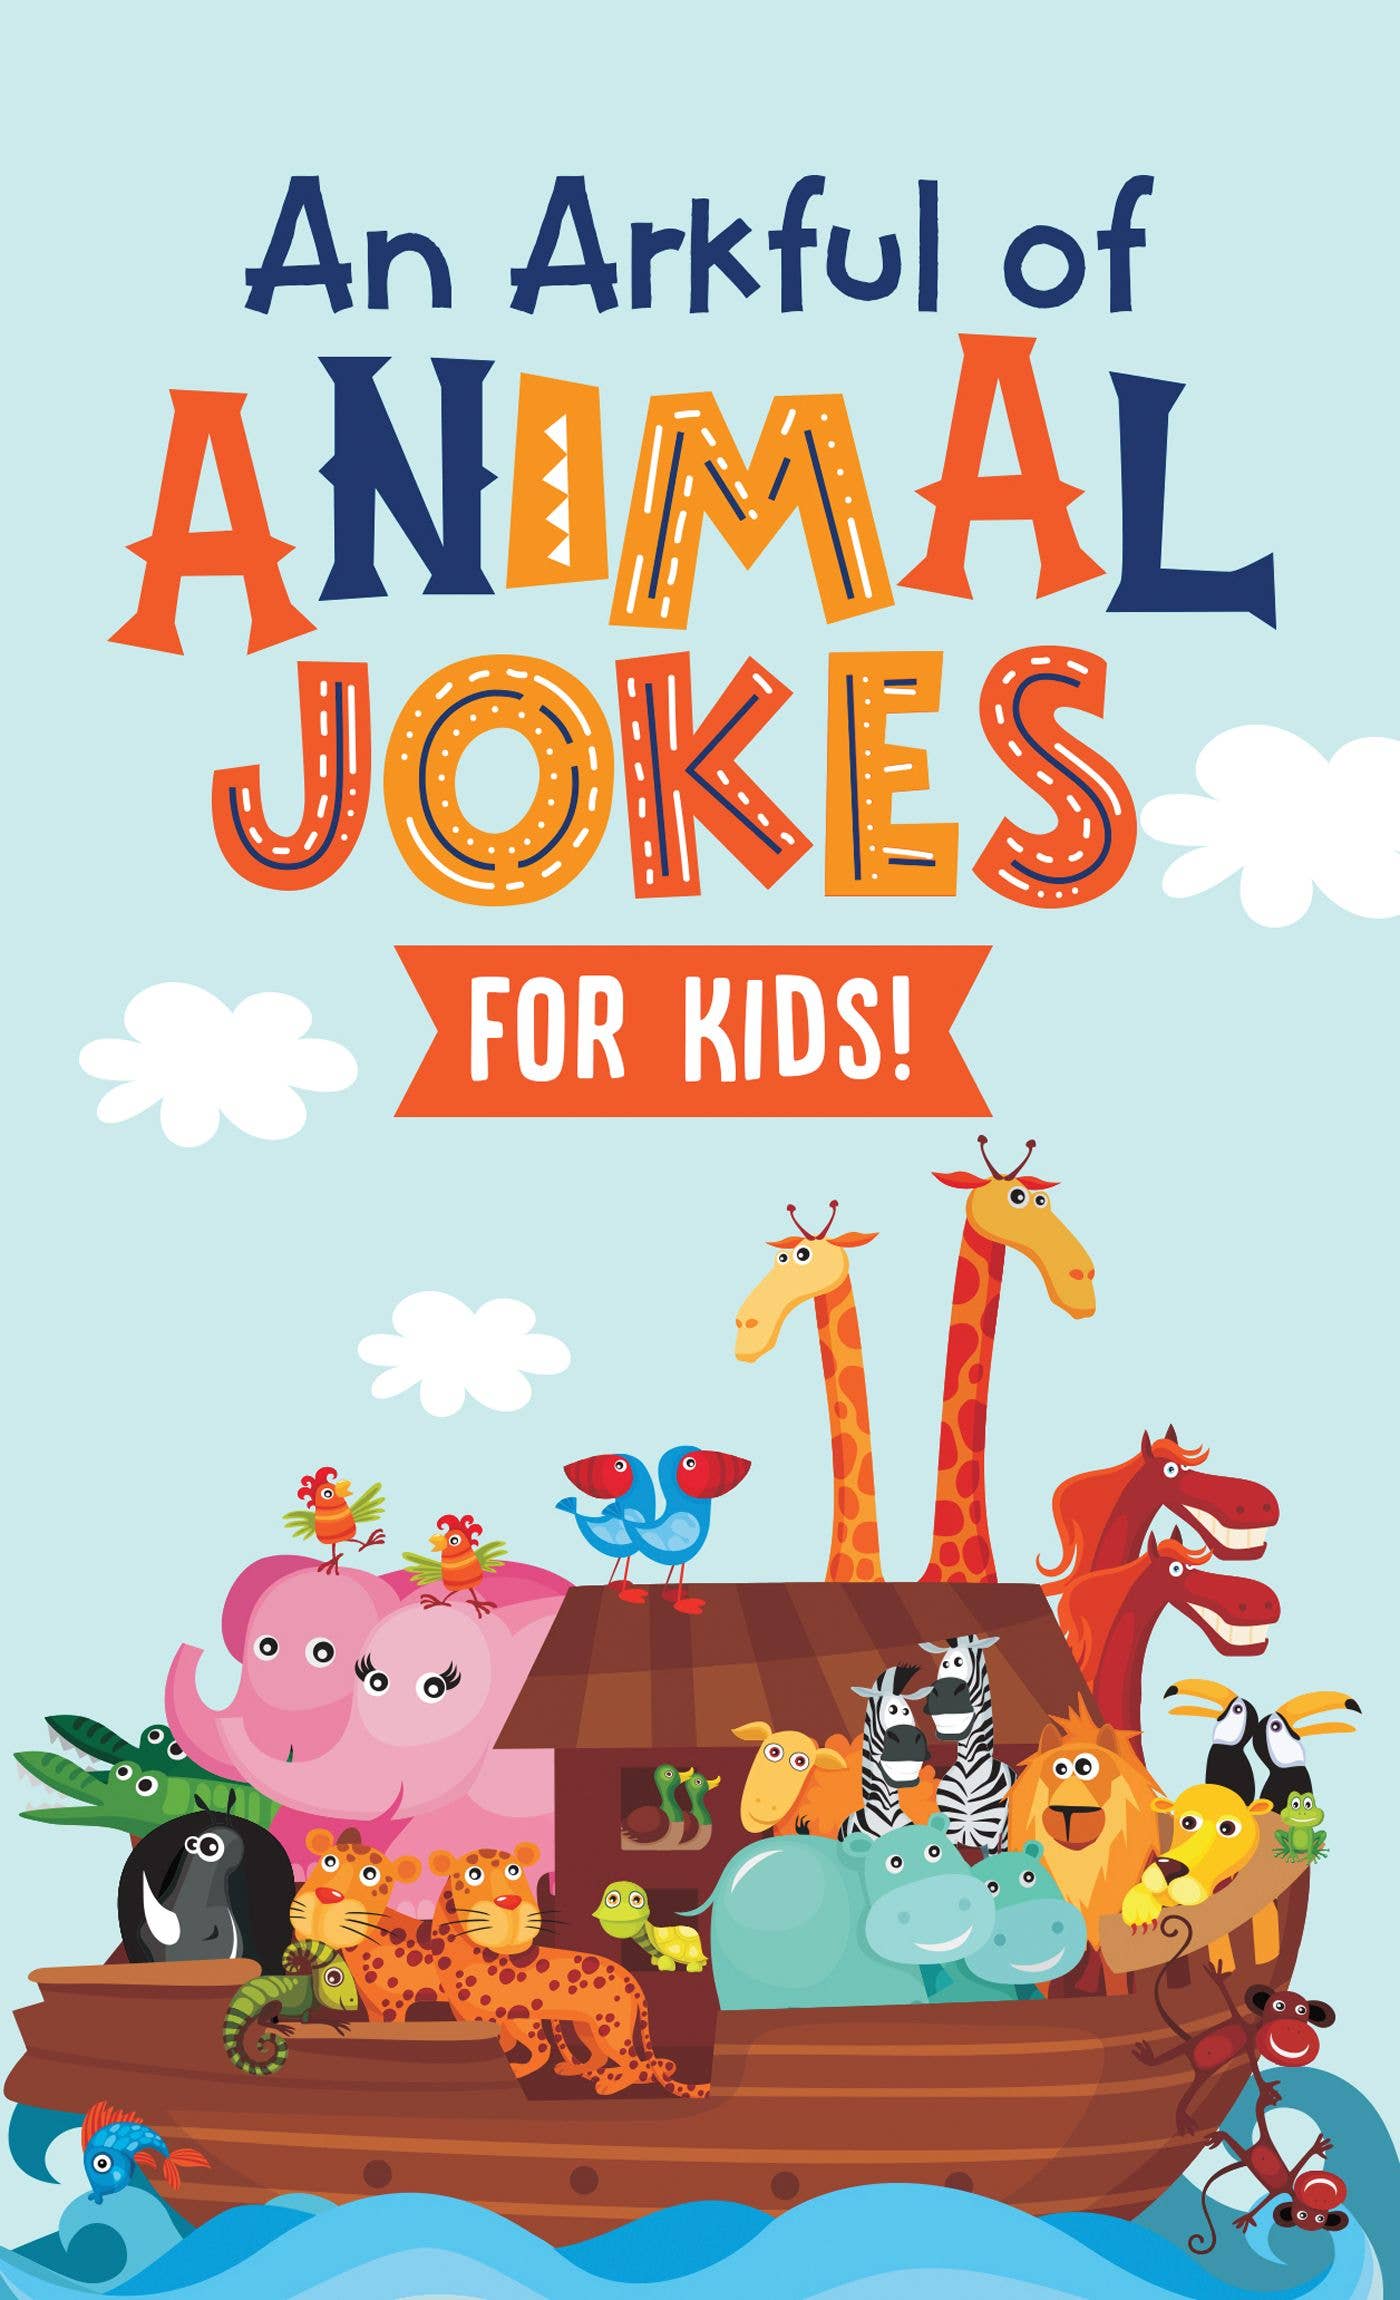 An Arkful of Animal Jokes for Kids